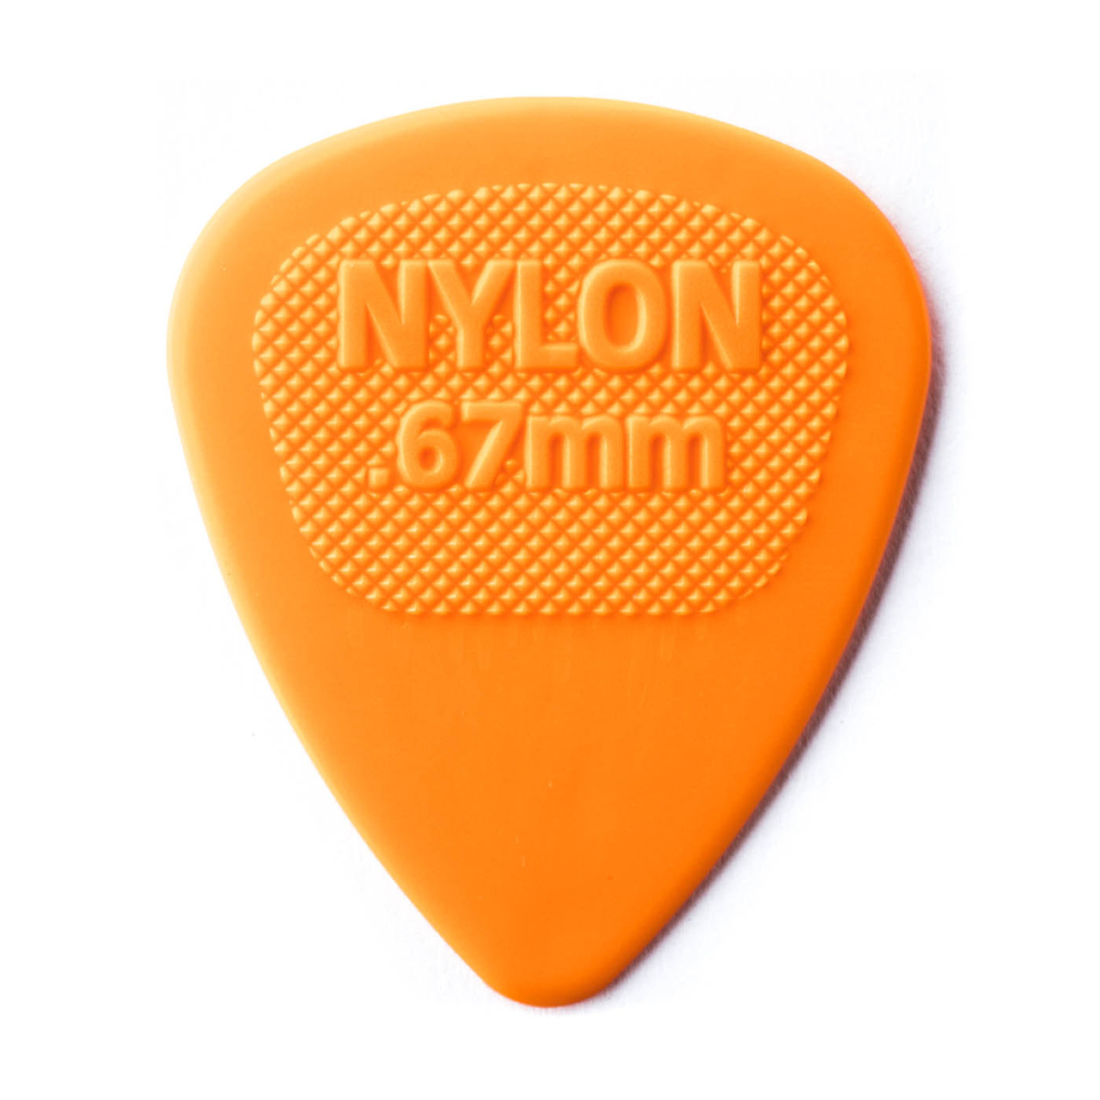 Nylon Midi Player Pack (72 Pack) - .67mm